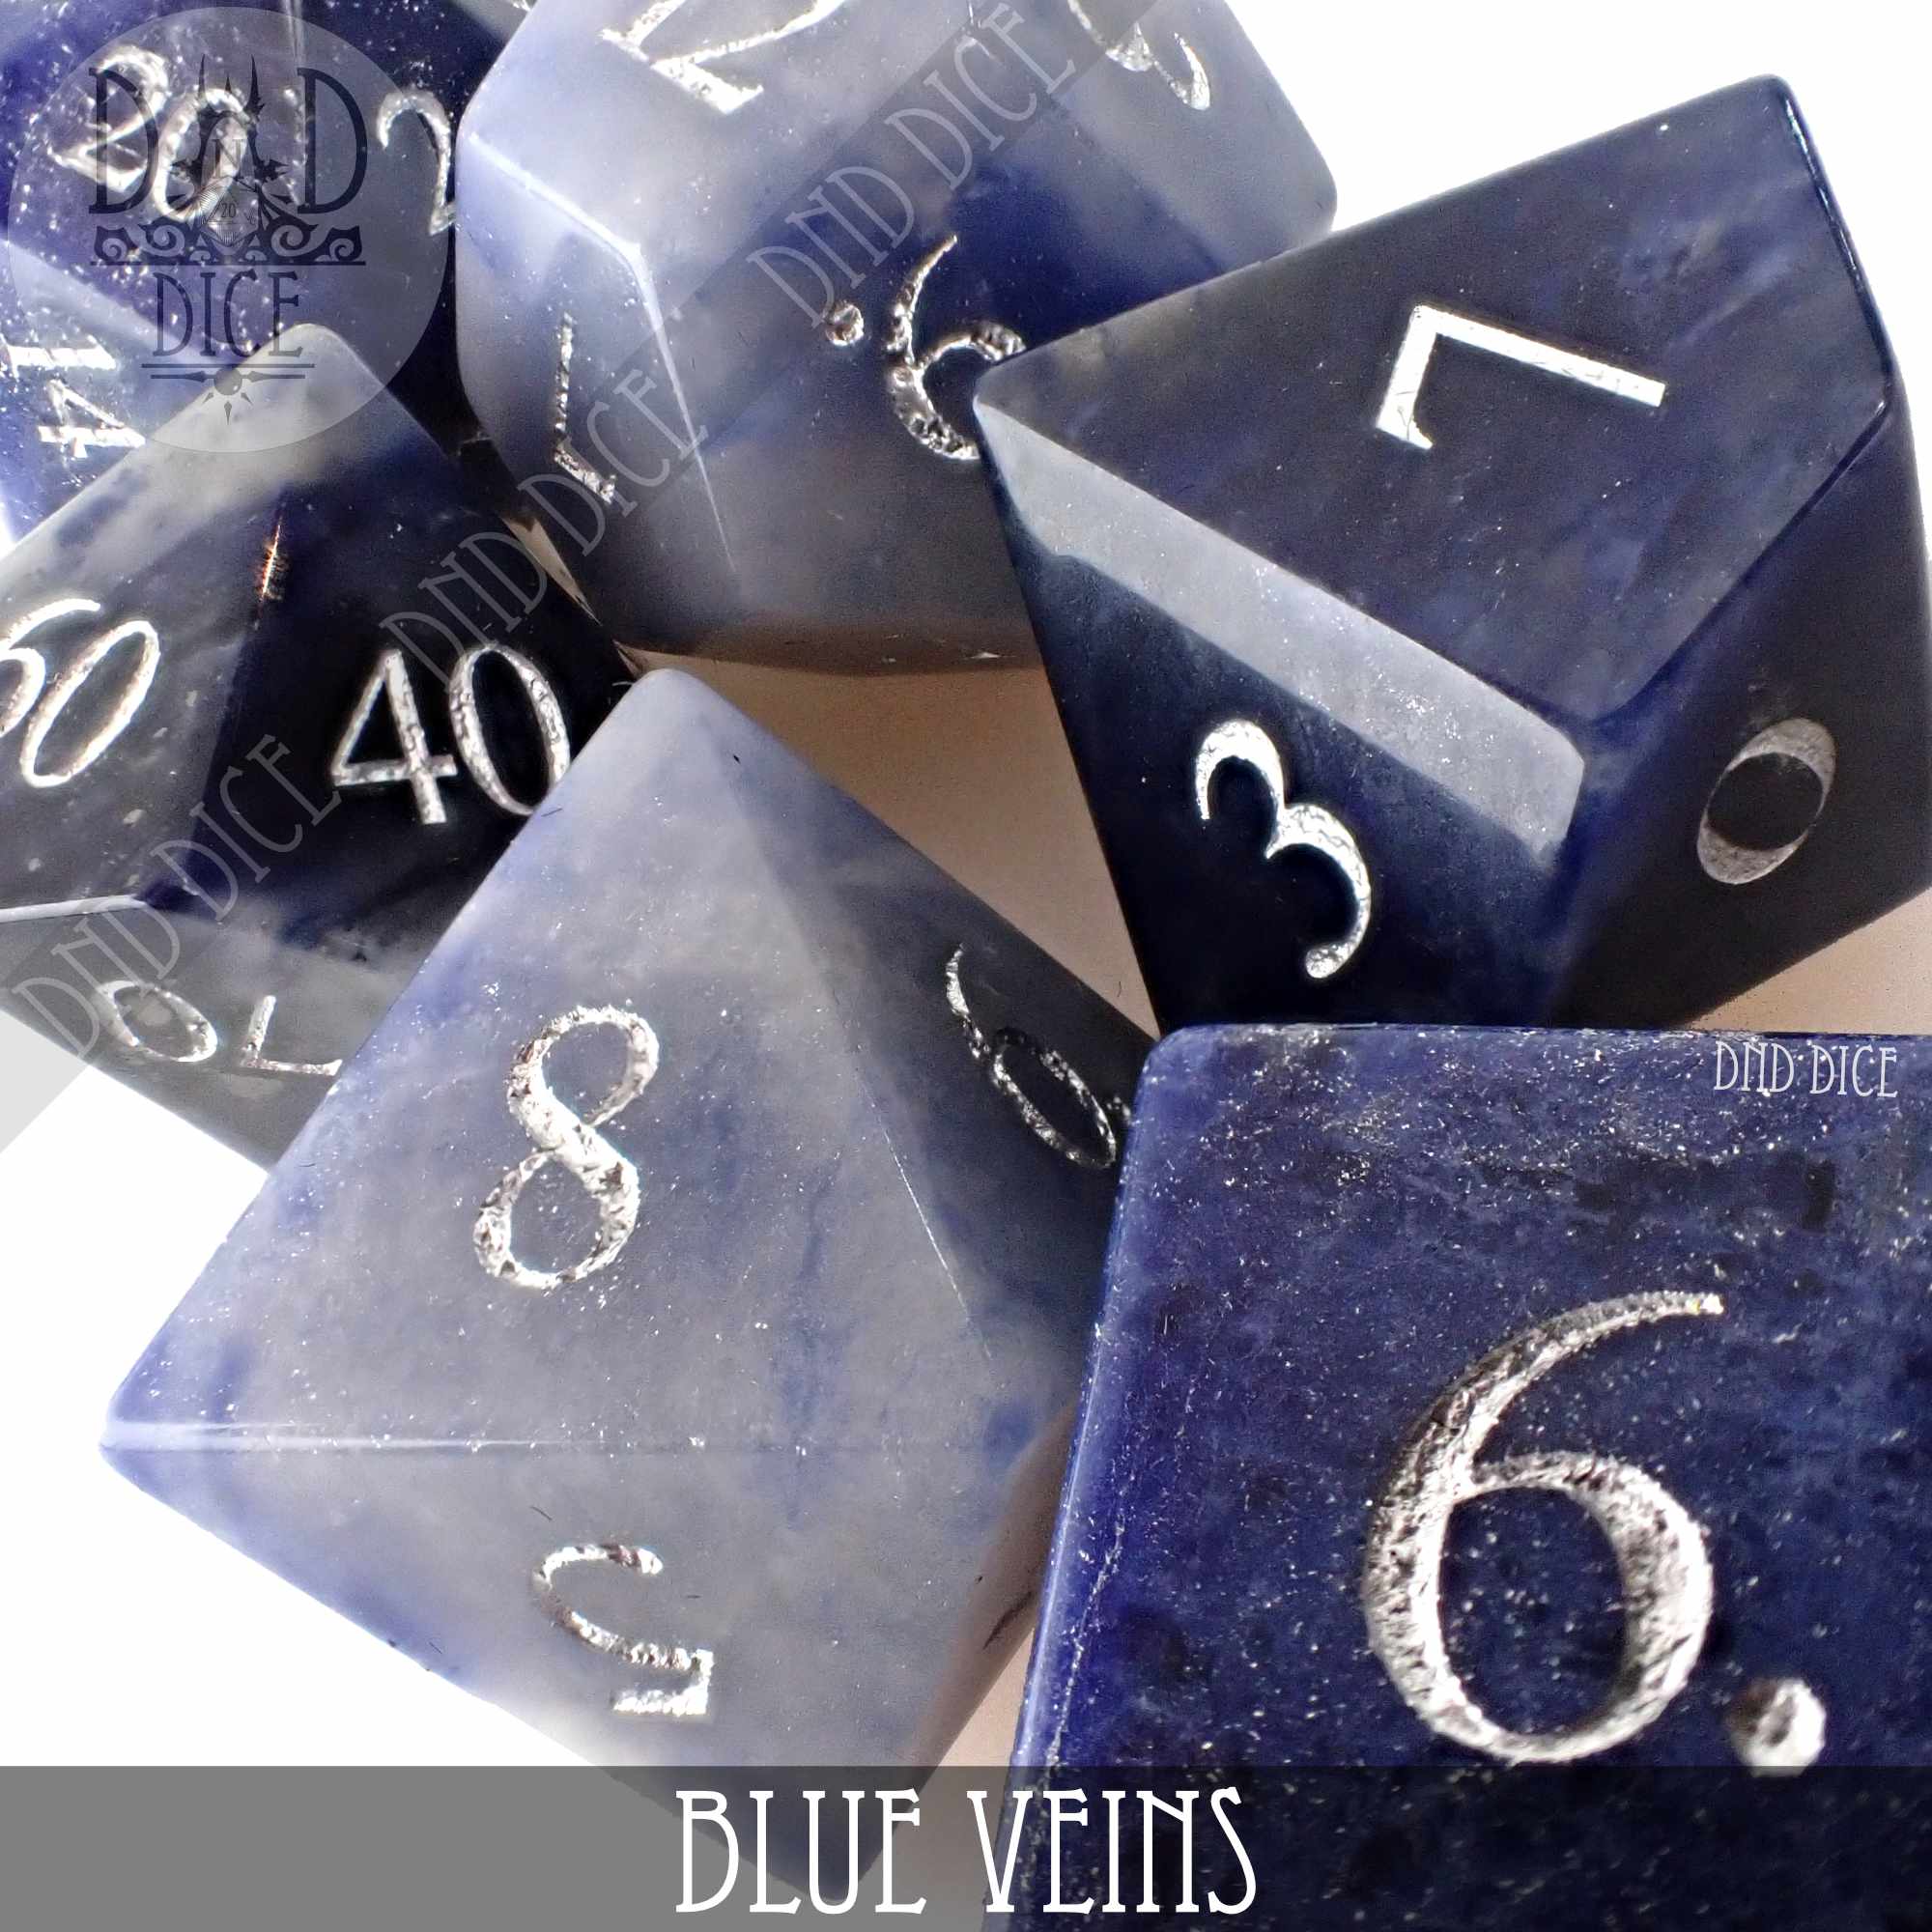 Blue Veins Dice Set (Gift Box)